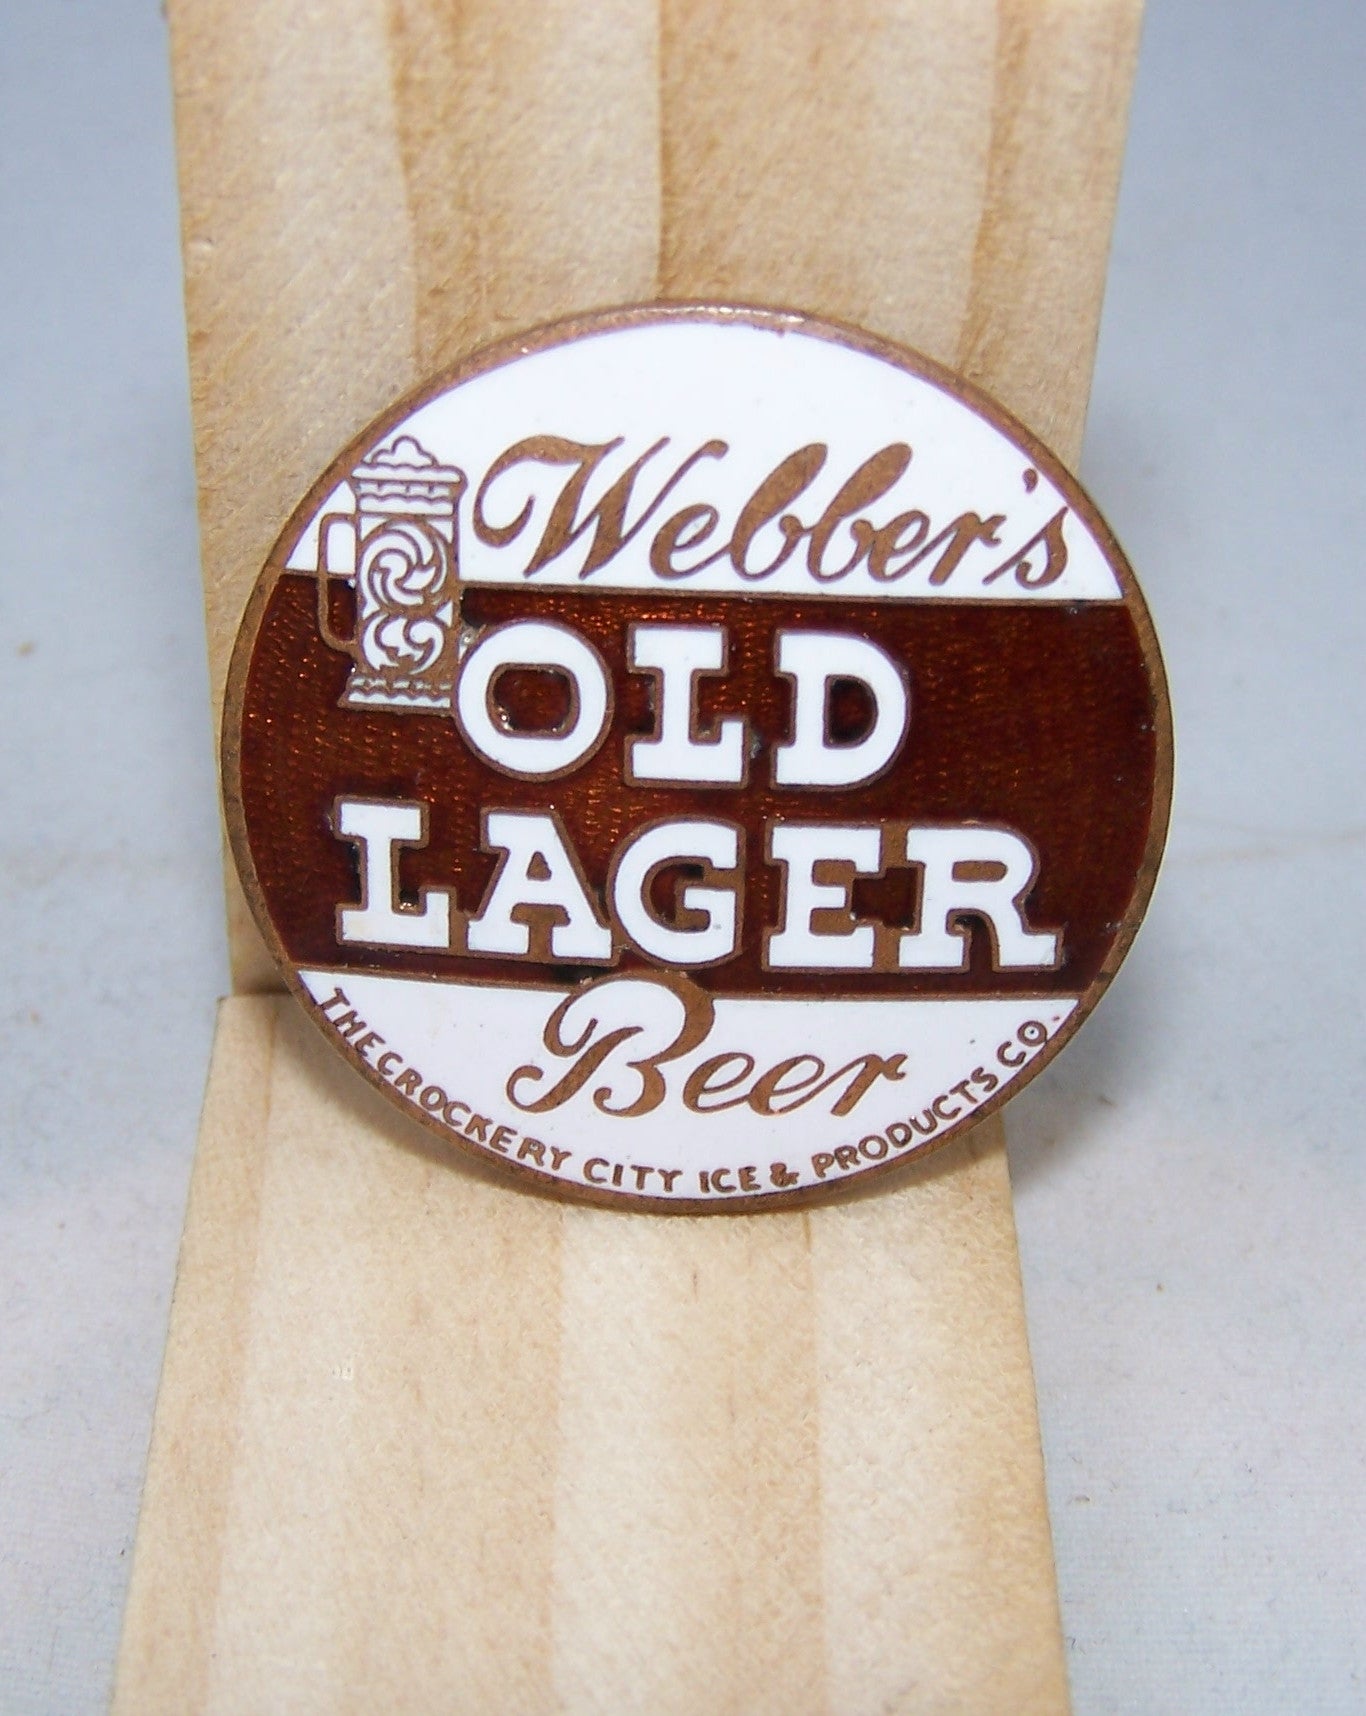 Webber's Old Lager Beer, Ball Knob Insert, Tap Marker page 122-1289, Grade 9+ Sold on 02/13/14